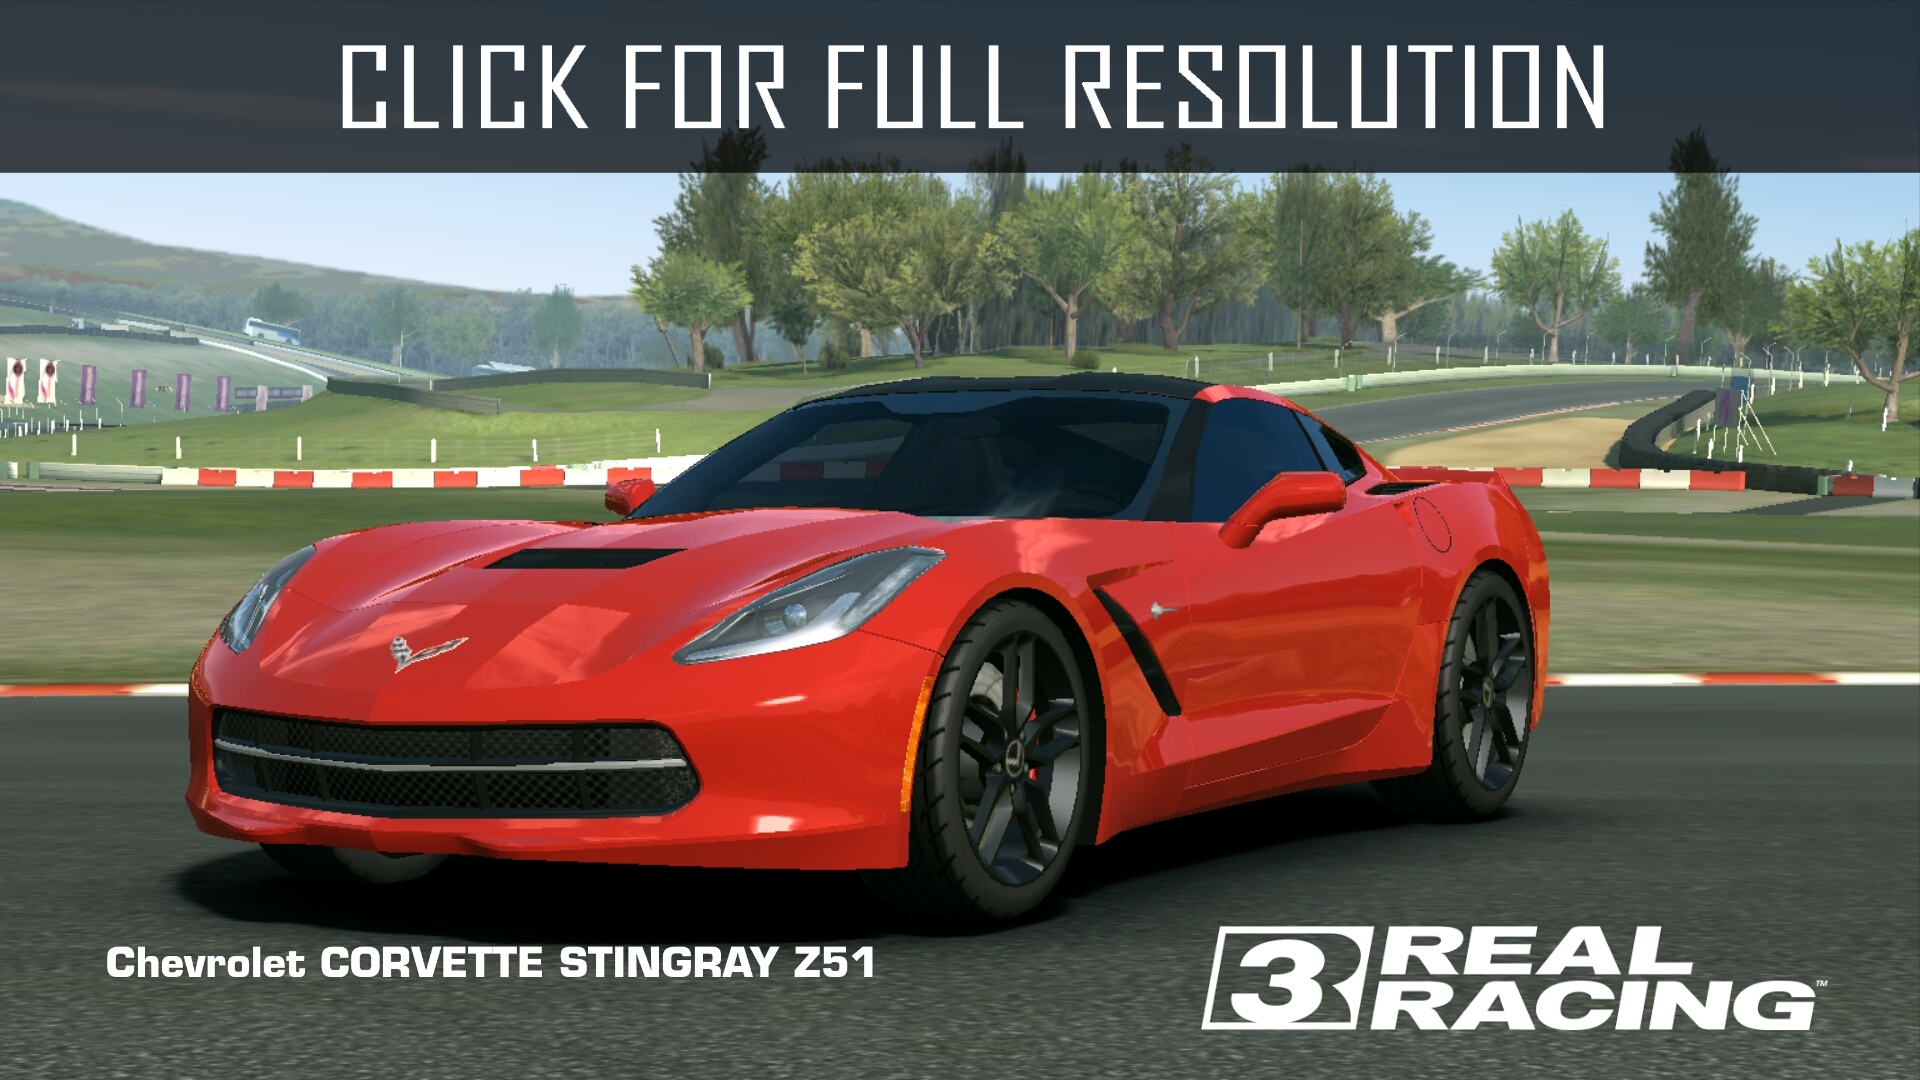 Chevrolet Corvette Stingray Z51